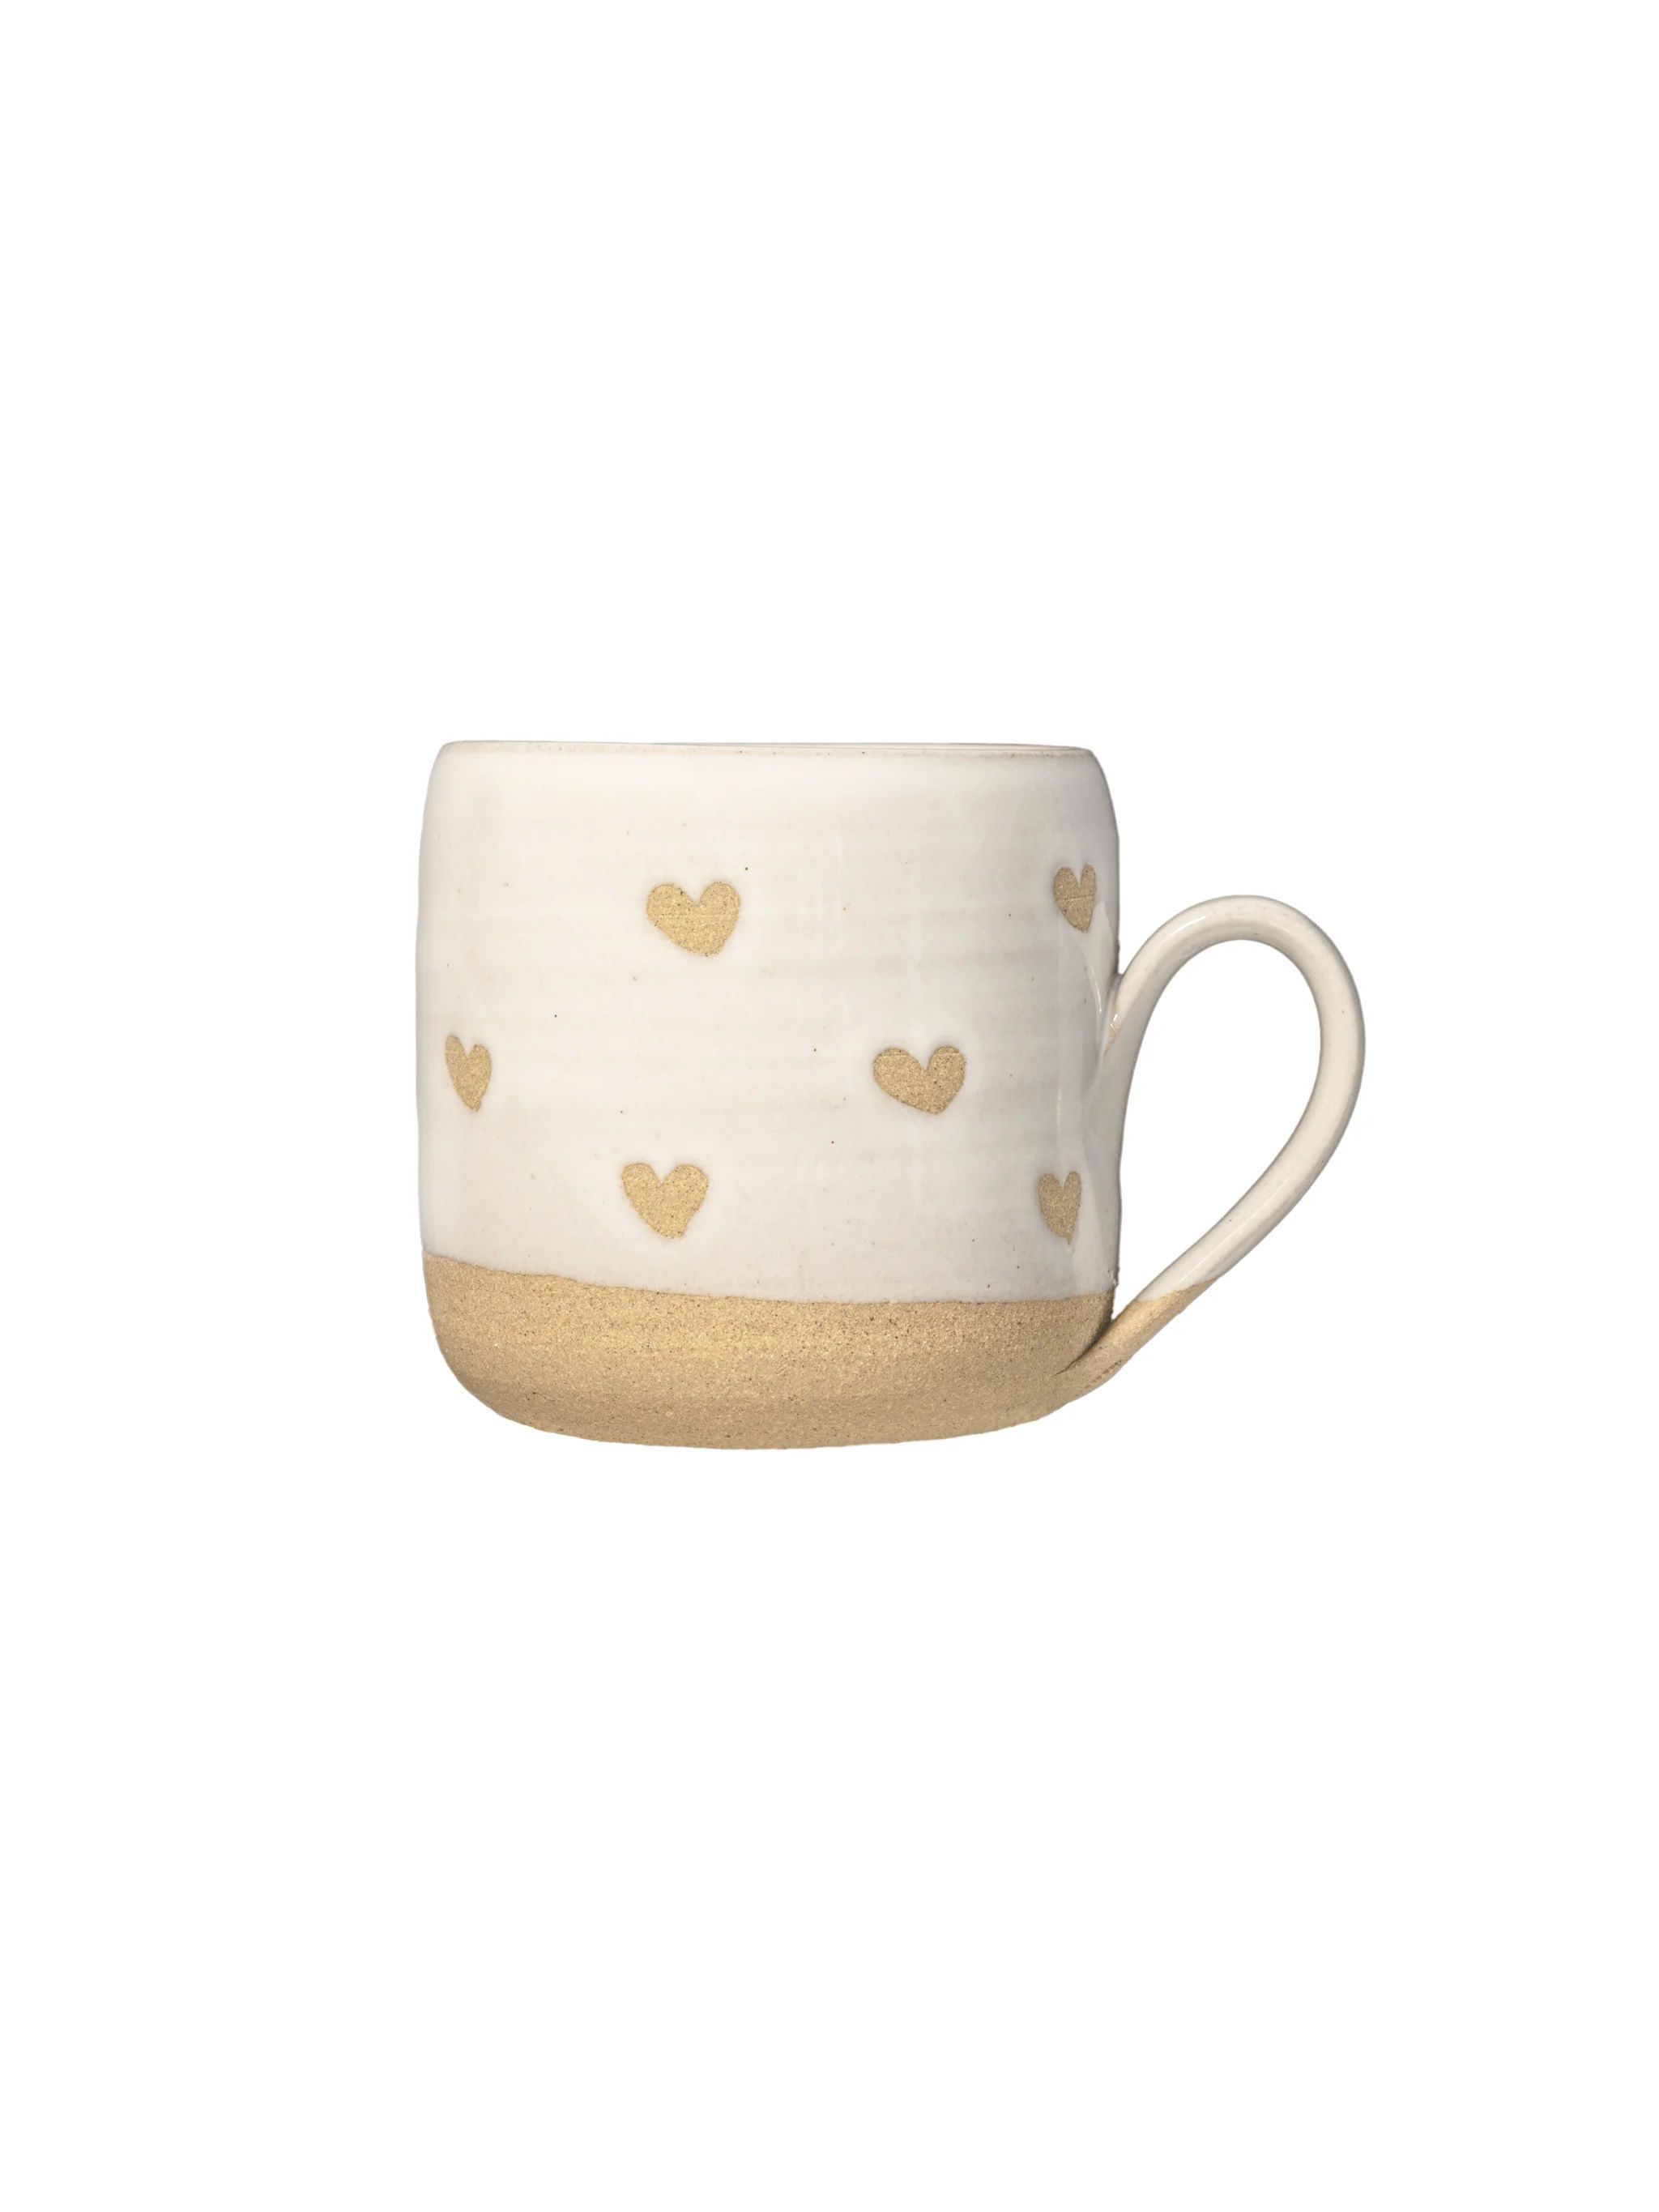 Farmhouse Pottery Confetti Hearts Mug | Weston Table